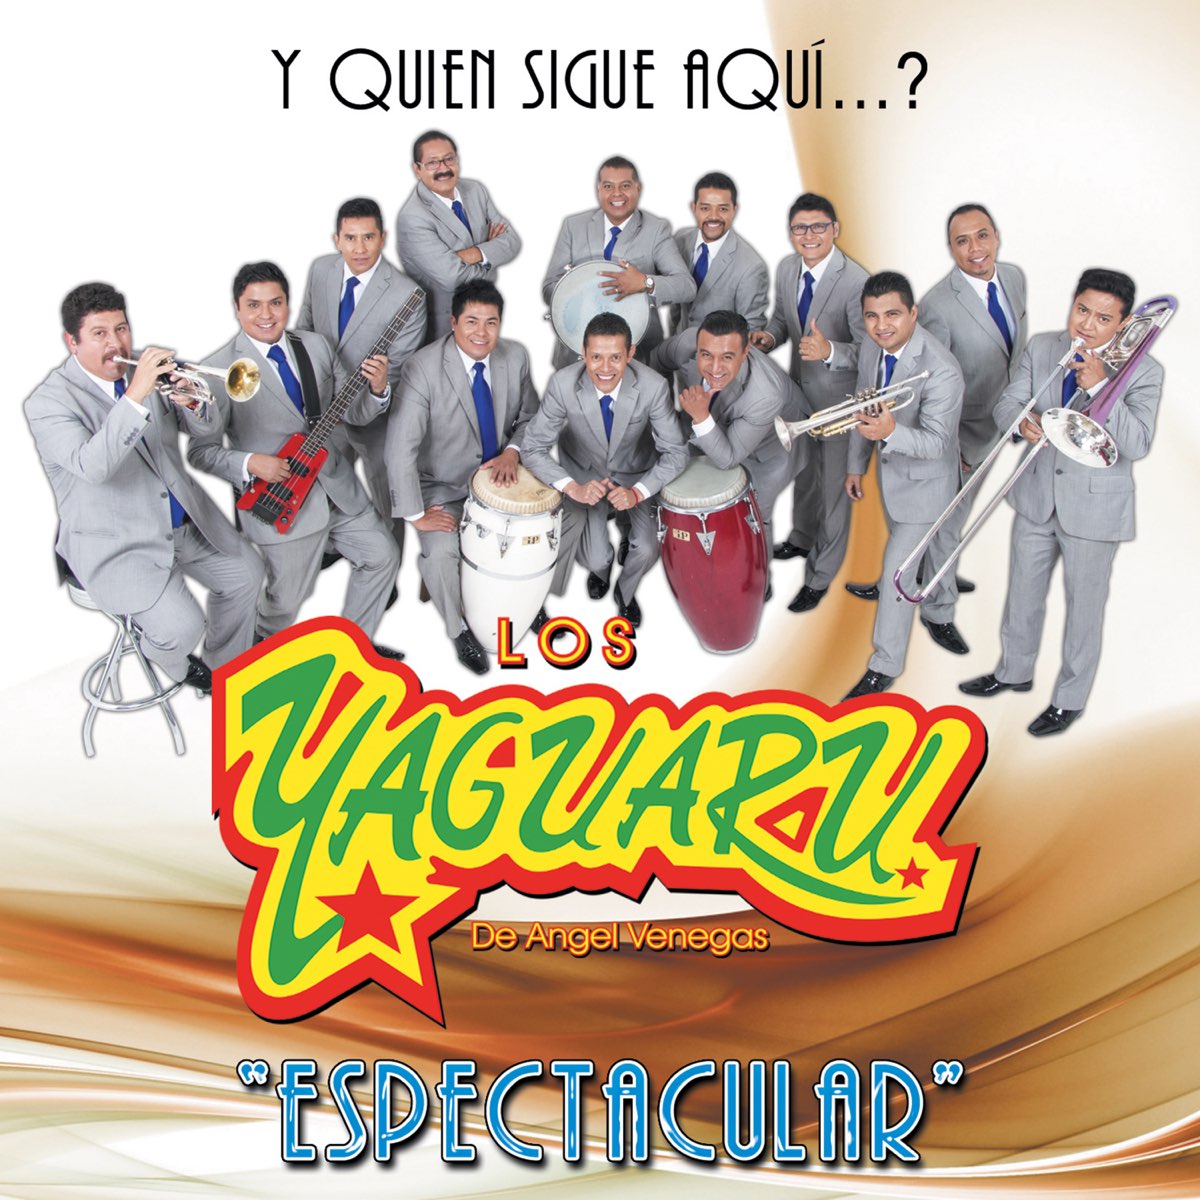 ‎Espectacular de Los Yaguaru en Apple Music